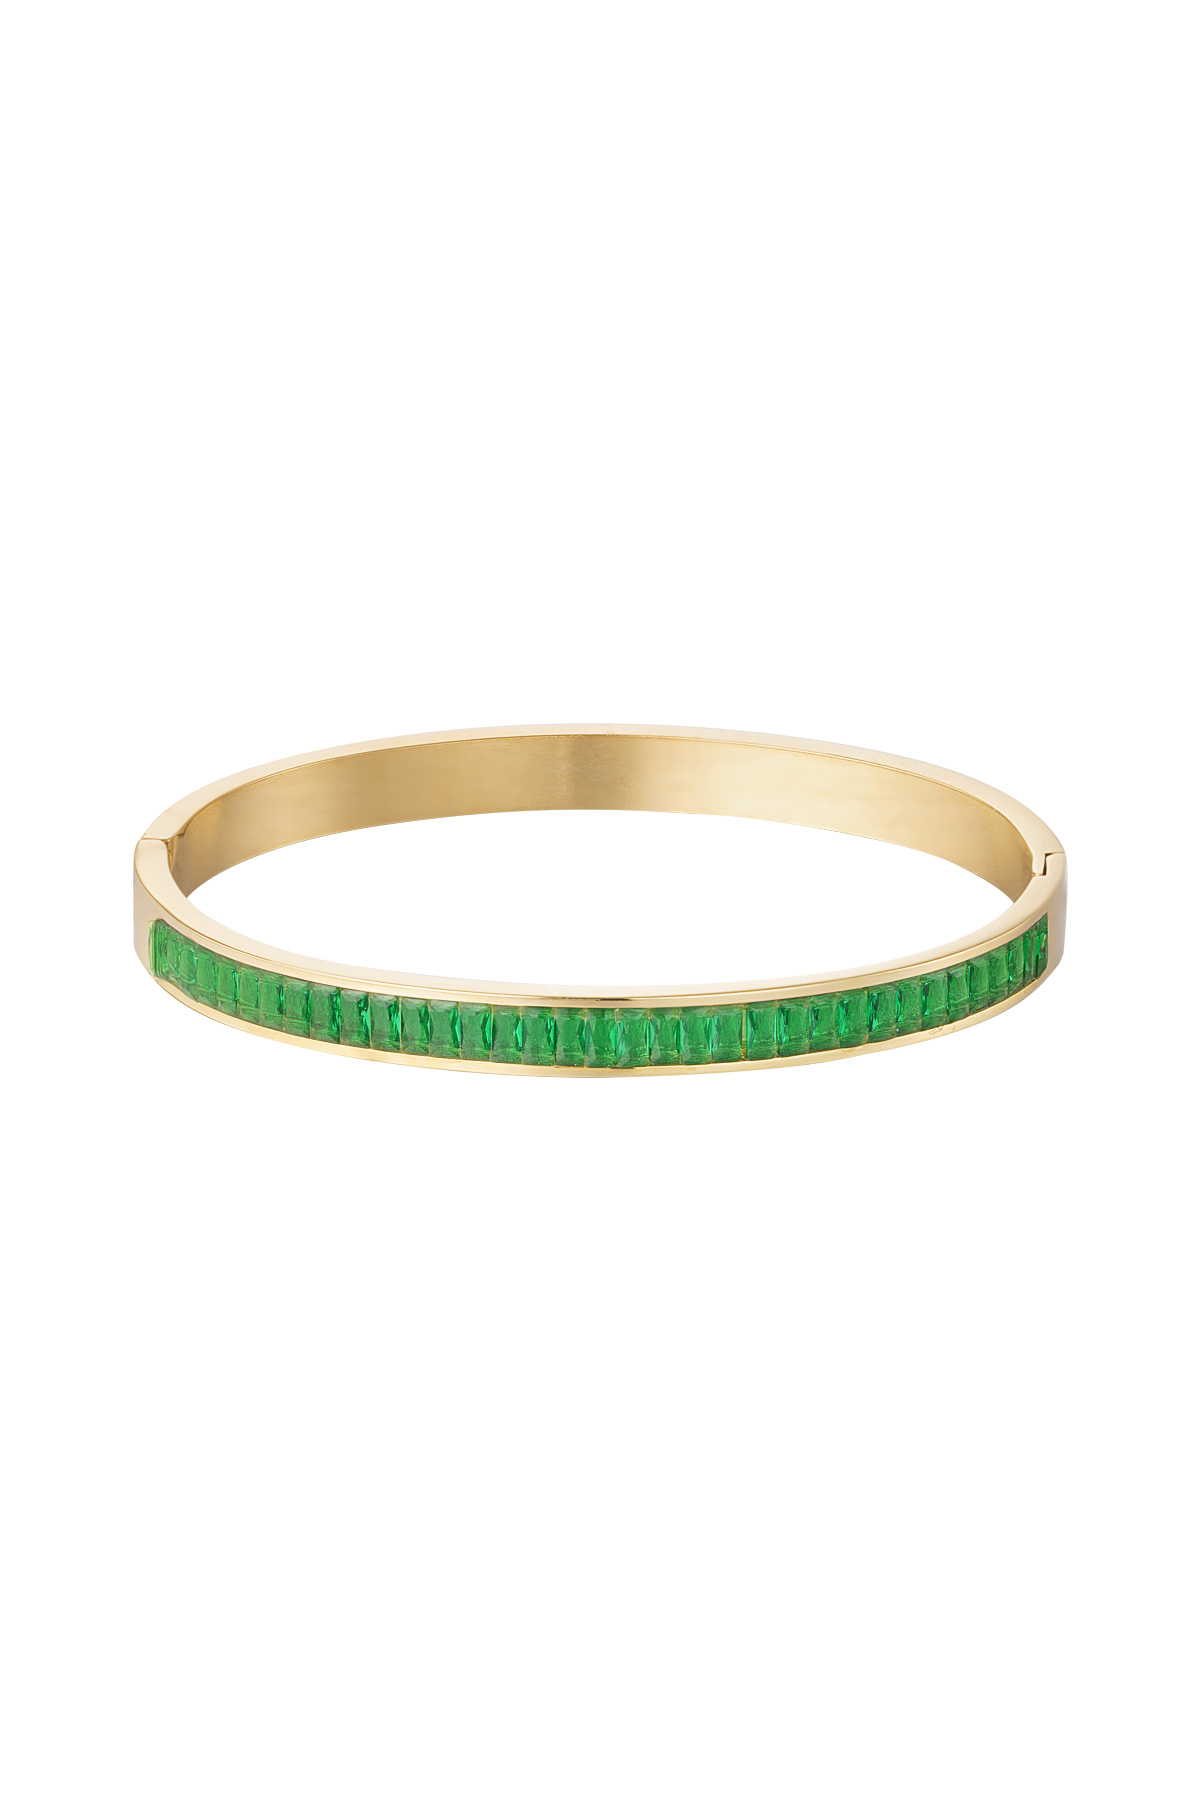 Slave bracelet stones - green h5 